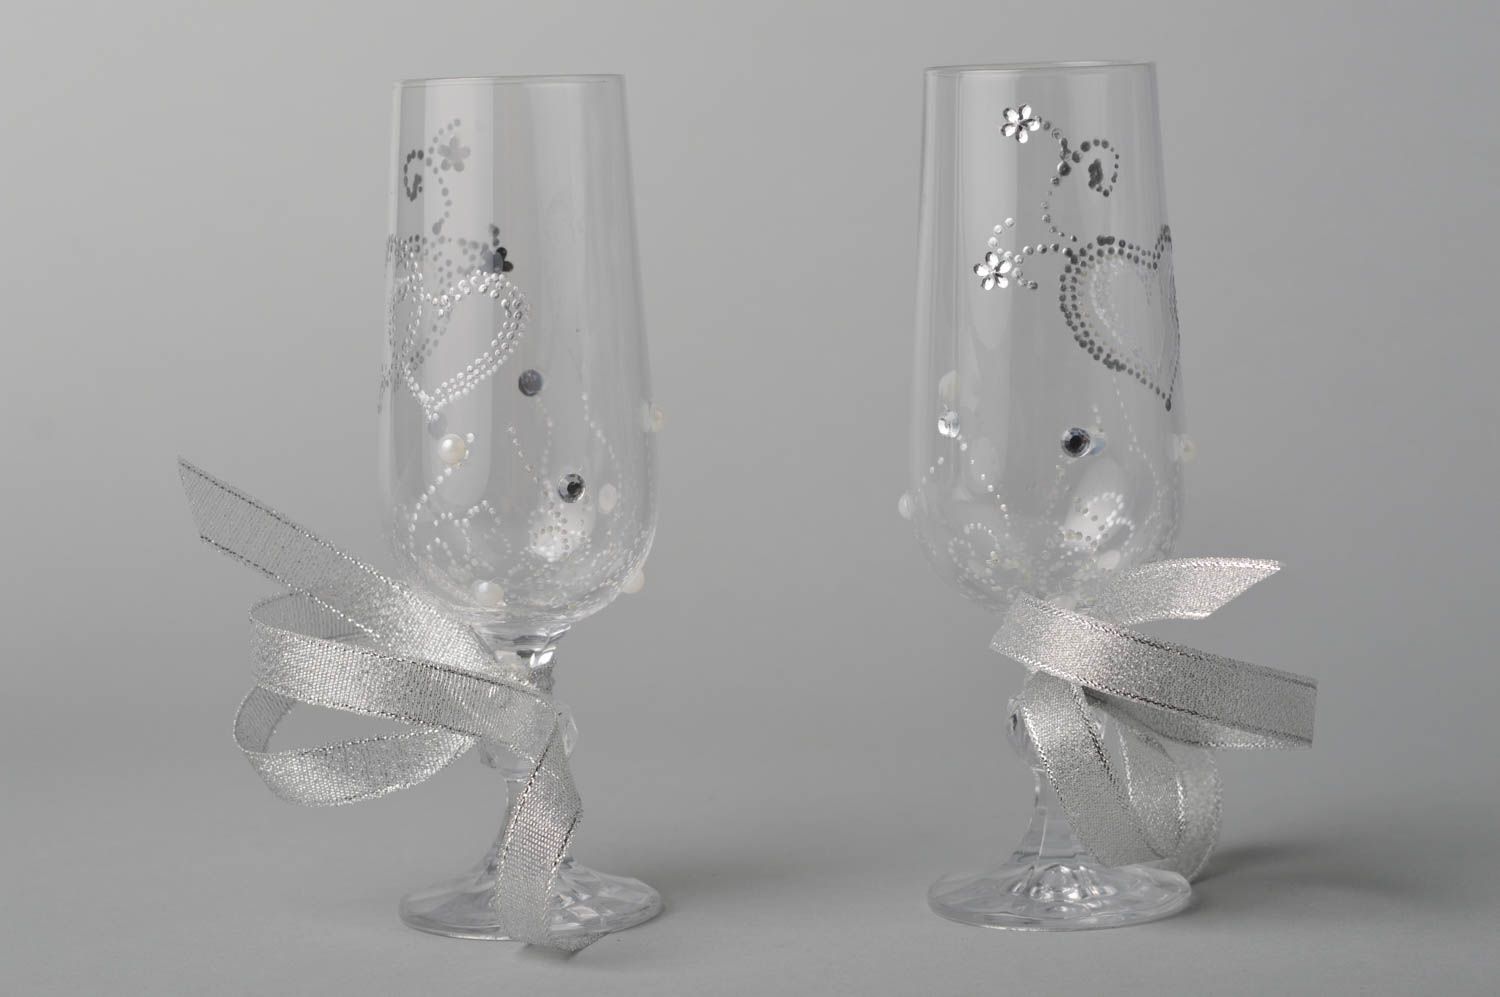 Handmade glasses wedding glasses for newlyweds wedding decor beautiful glasses photo 3